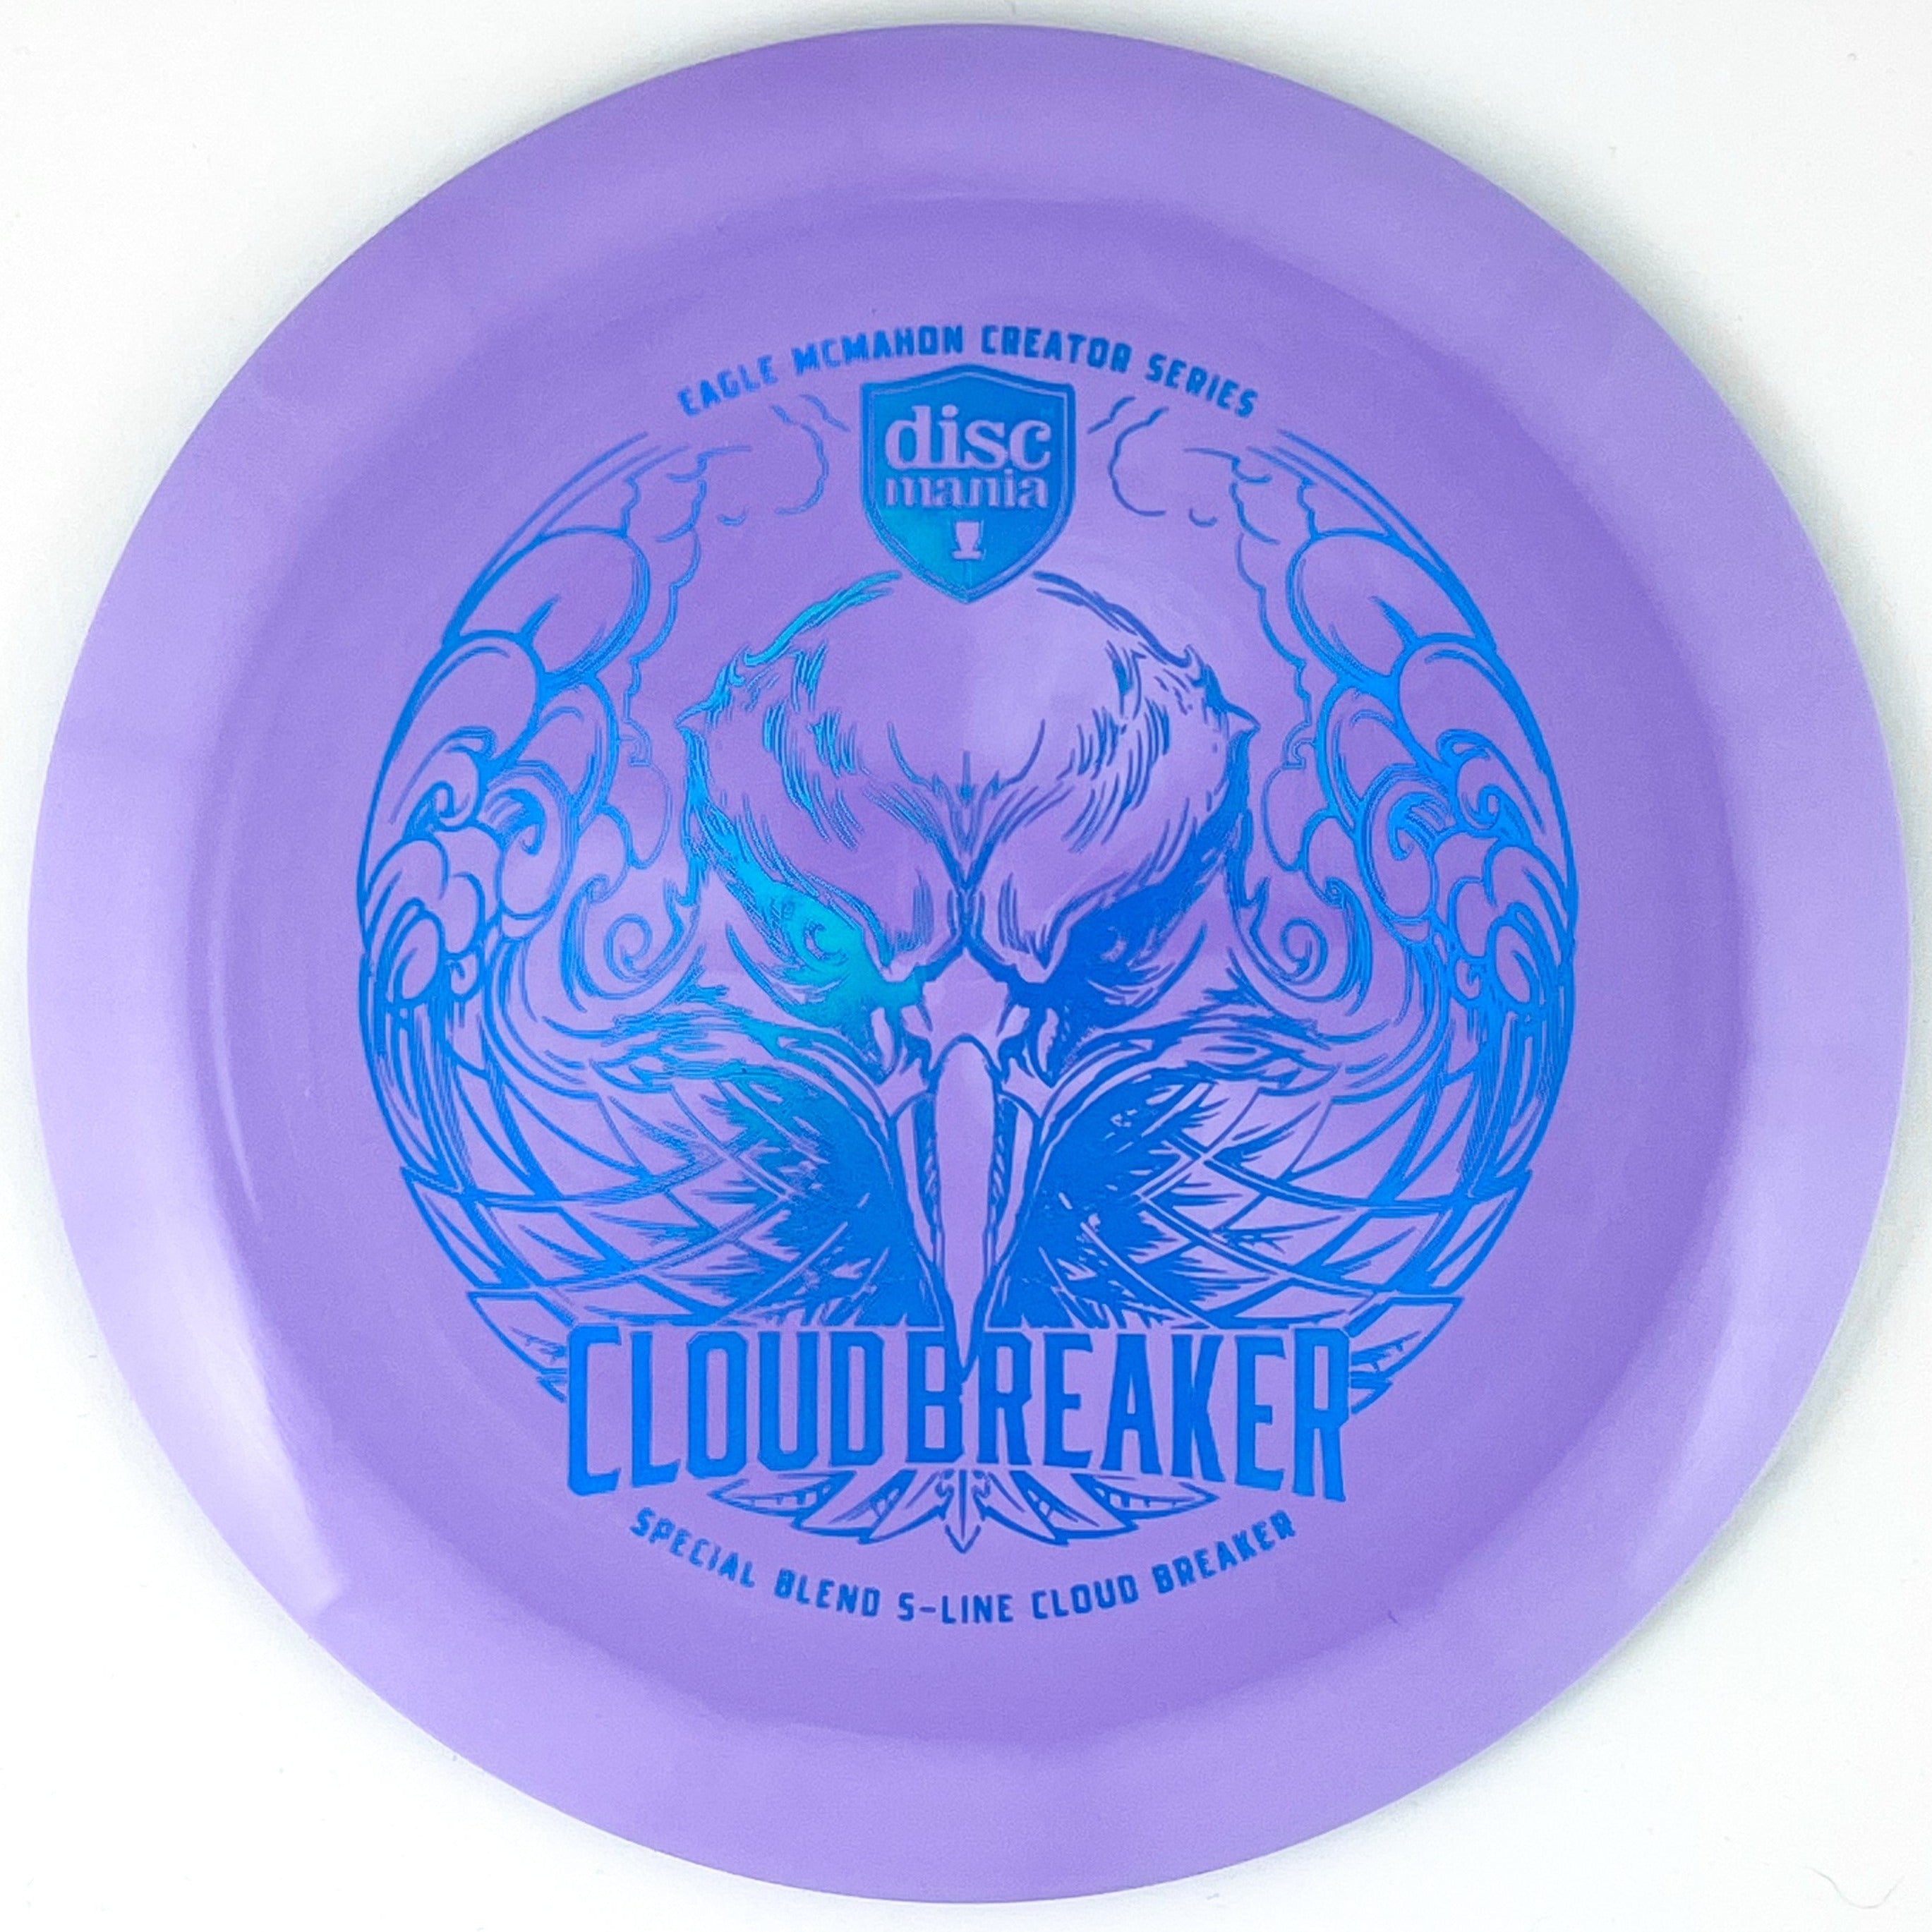 Lavender Eagle McMahon Creator Series Cloud Breaker disc golf distance driver by Discmania Golf Discs.